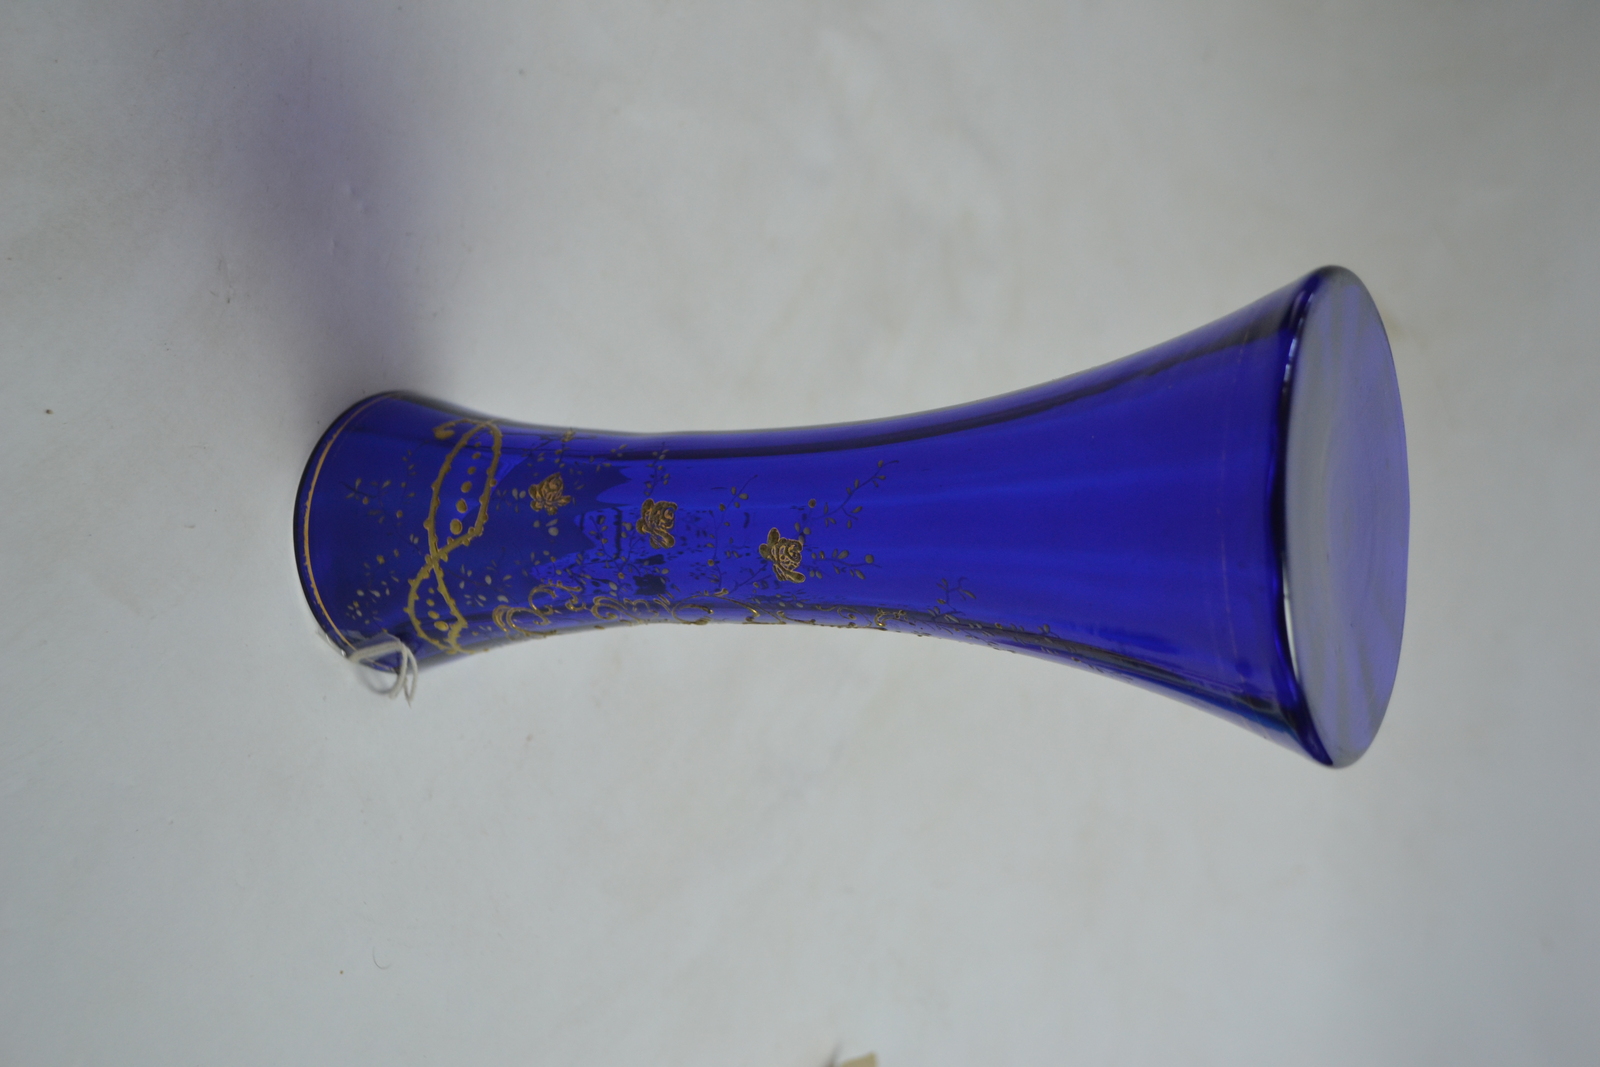 19th Century Bohemian Blue Enamel Vase